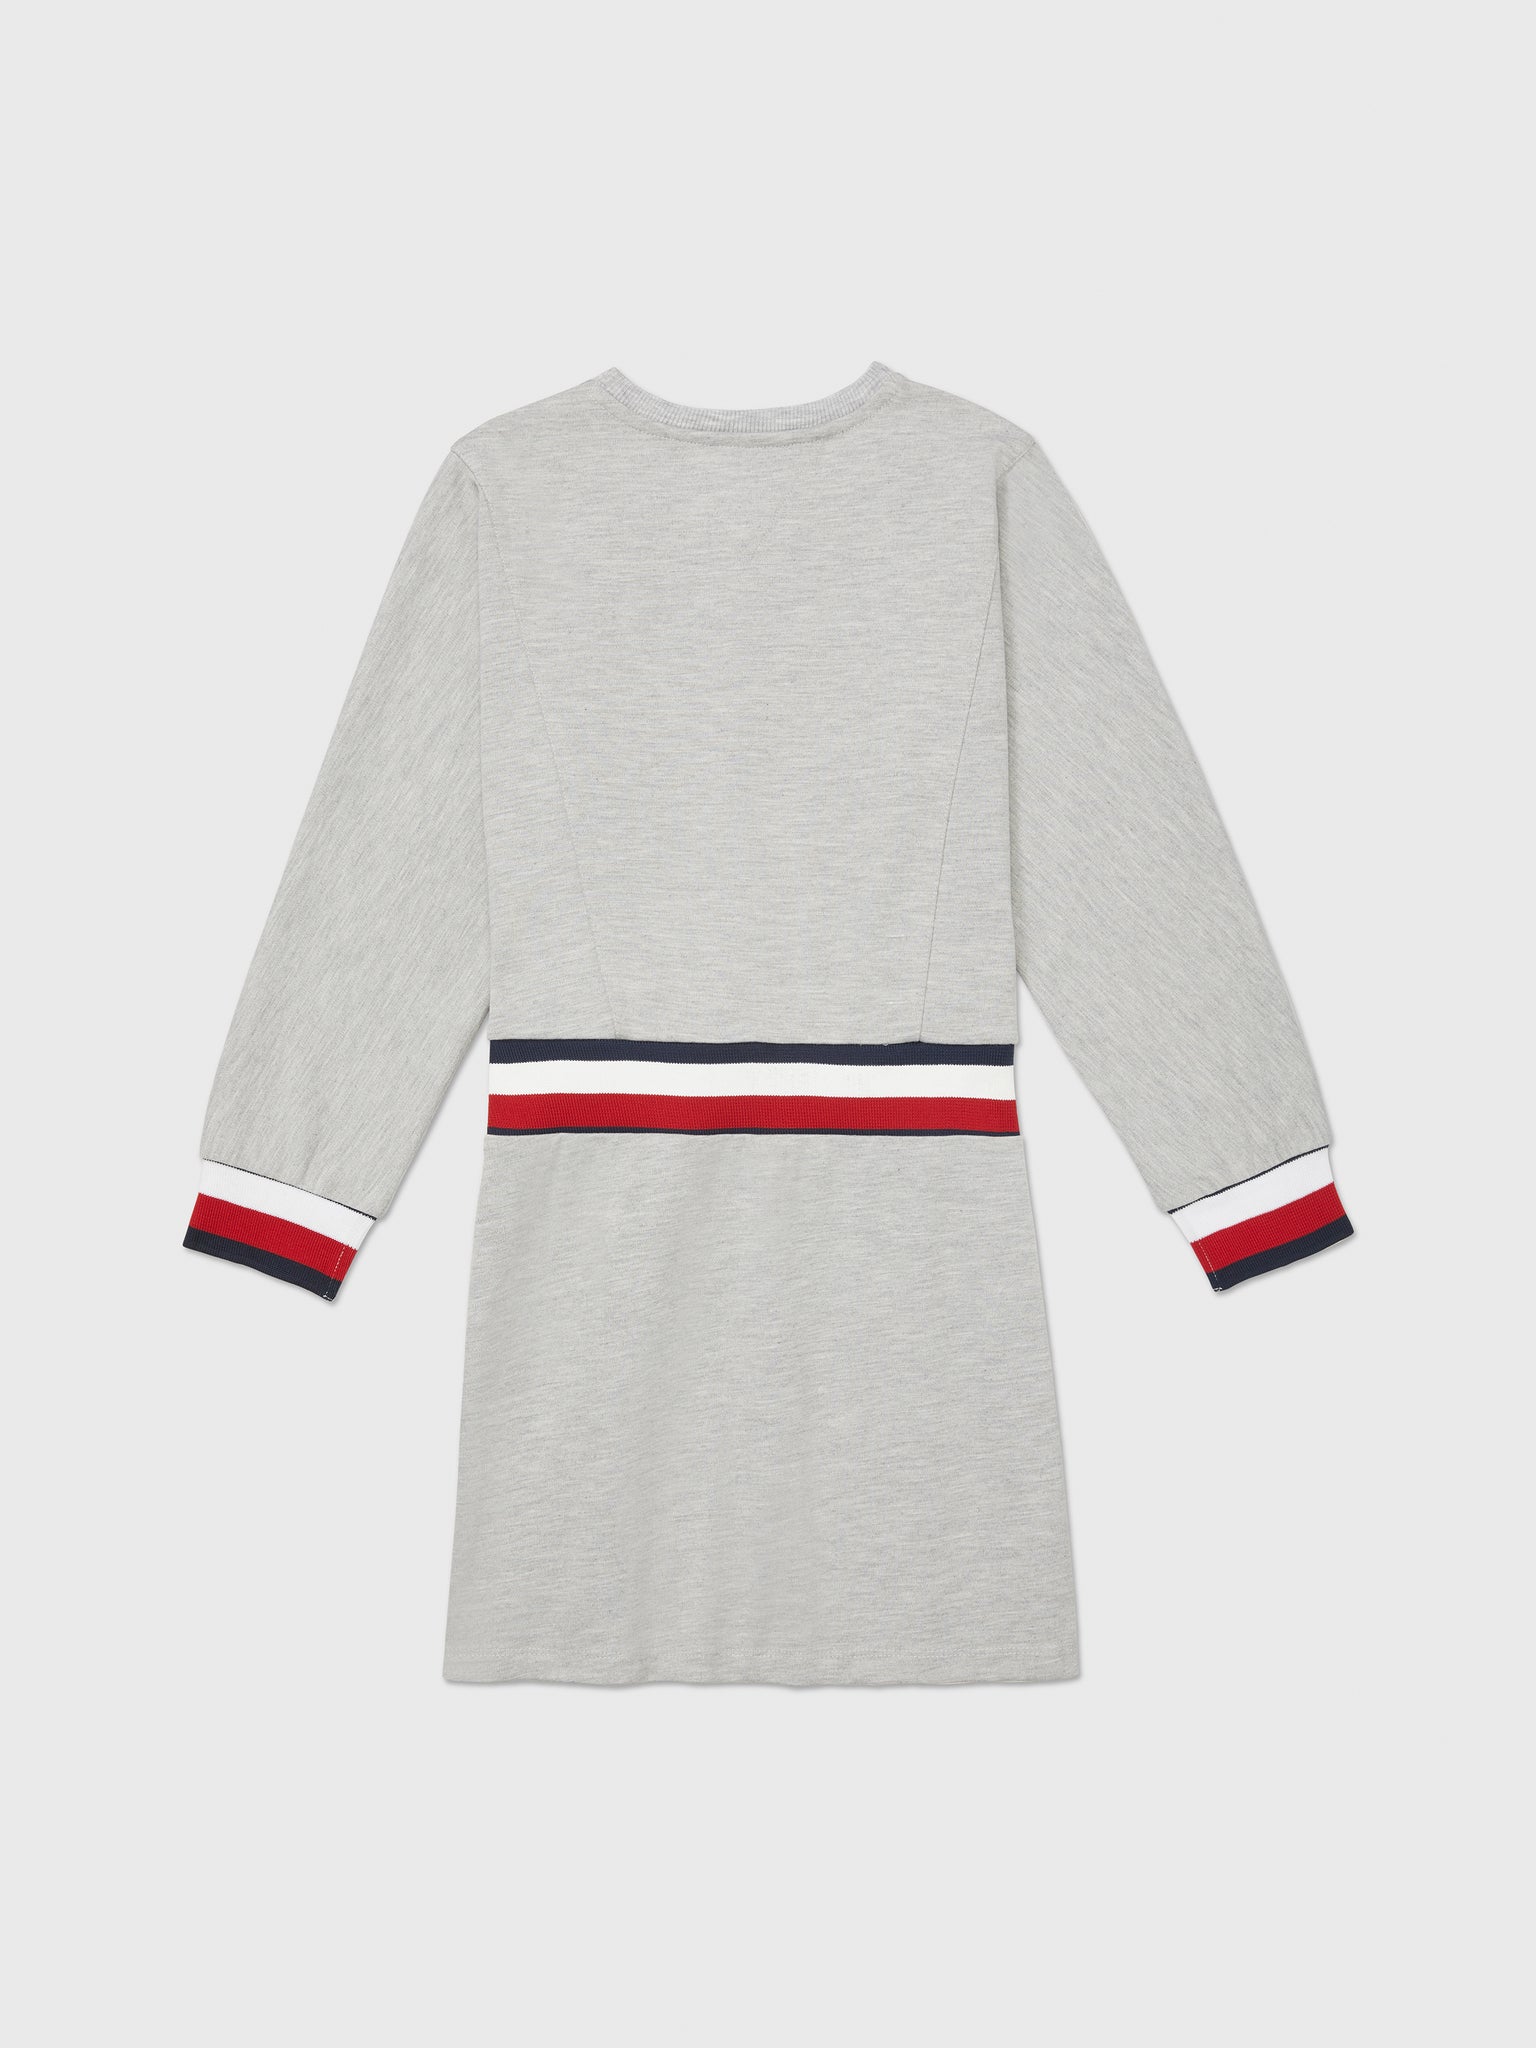 Port Access Stripe Knit Dress (Girls) - Grey